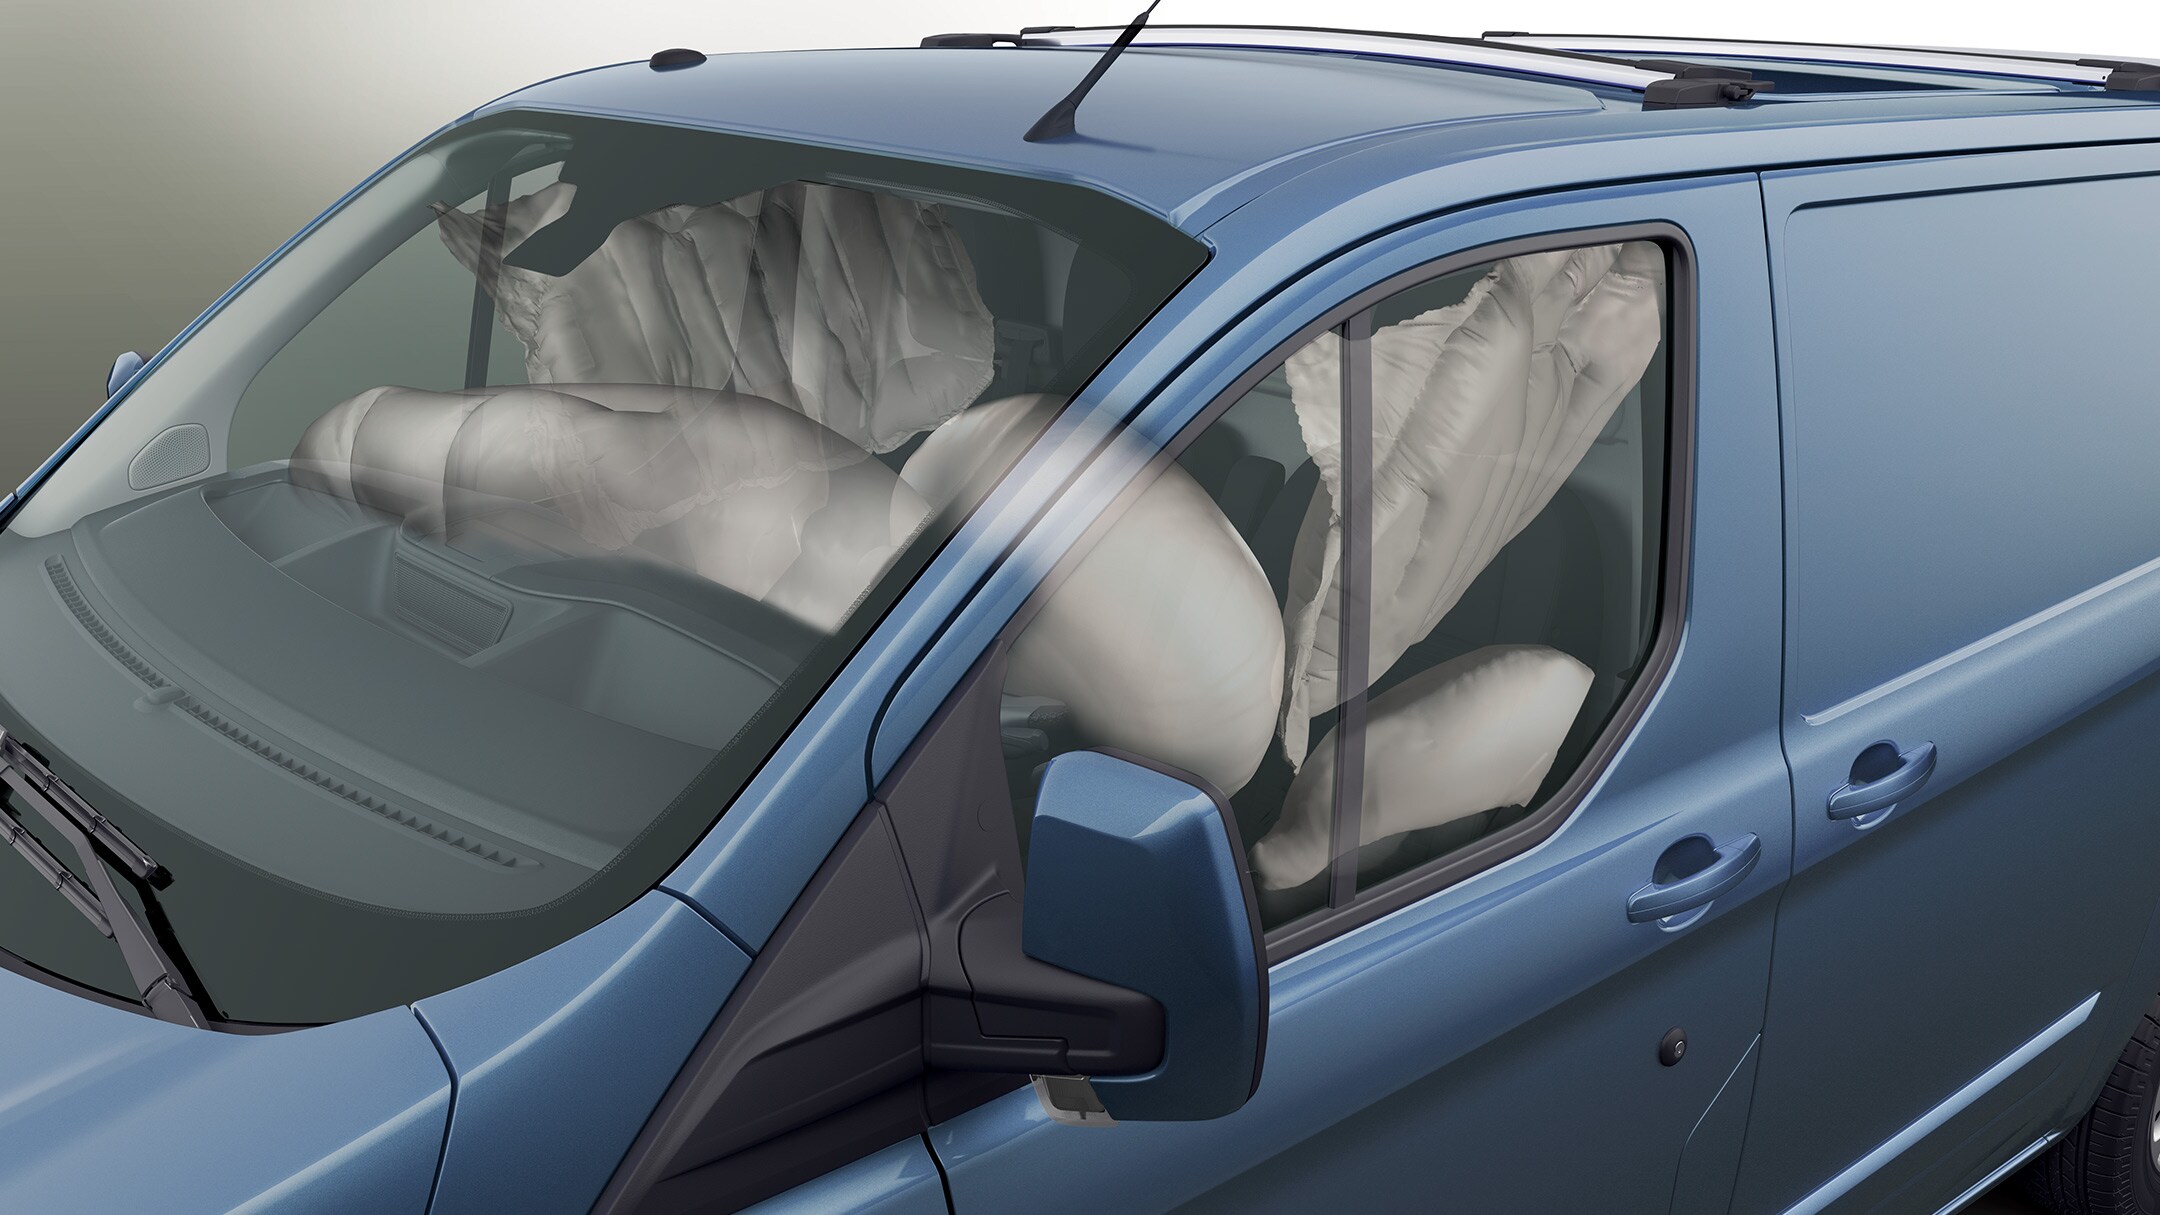 Ford Transit Custom in Blau. Ausschnitt Airbags im Detail